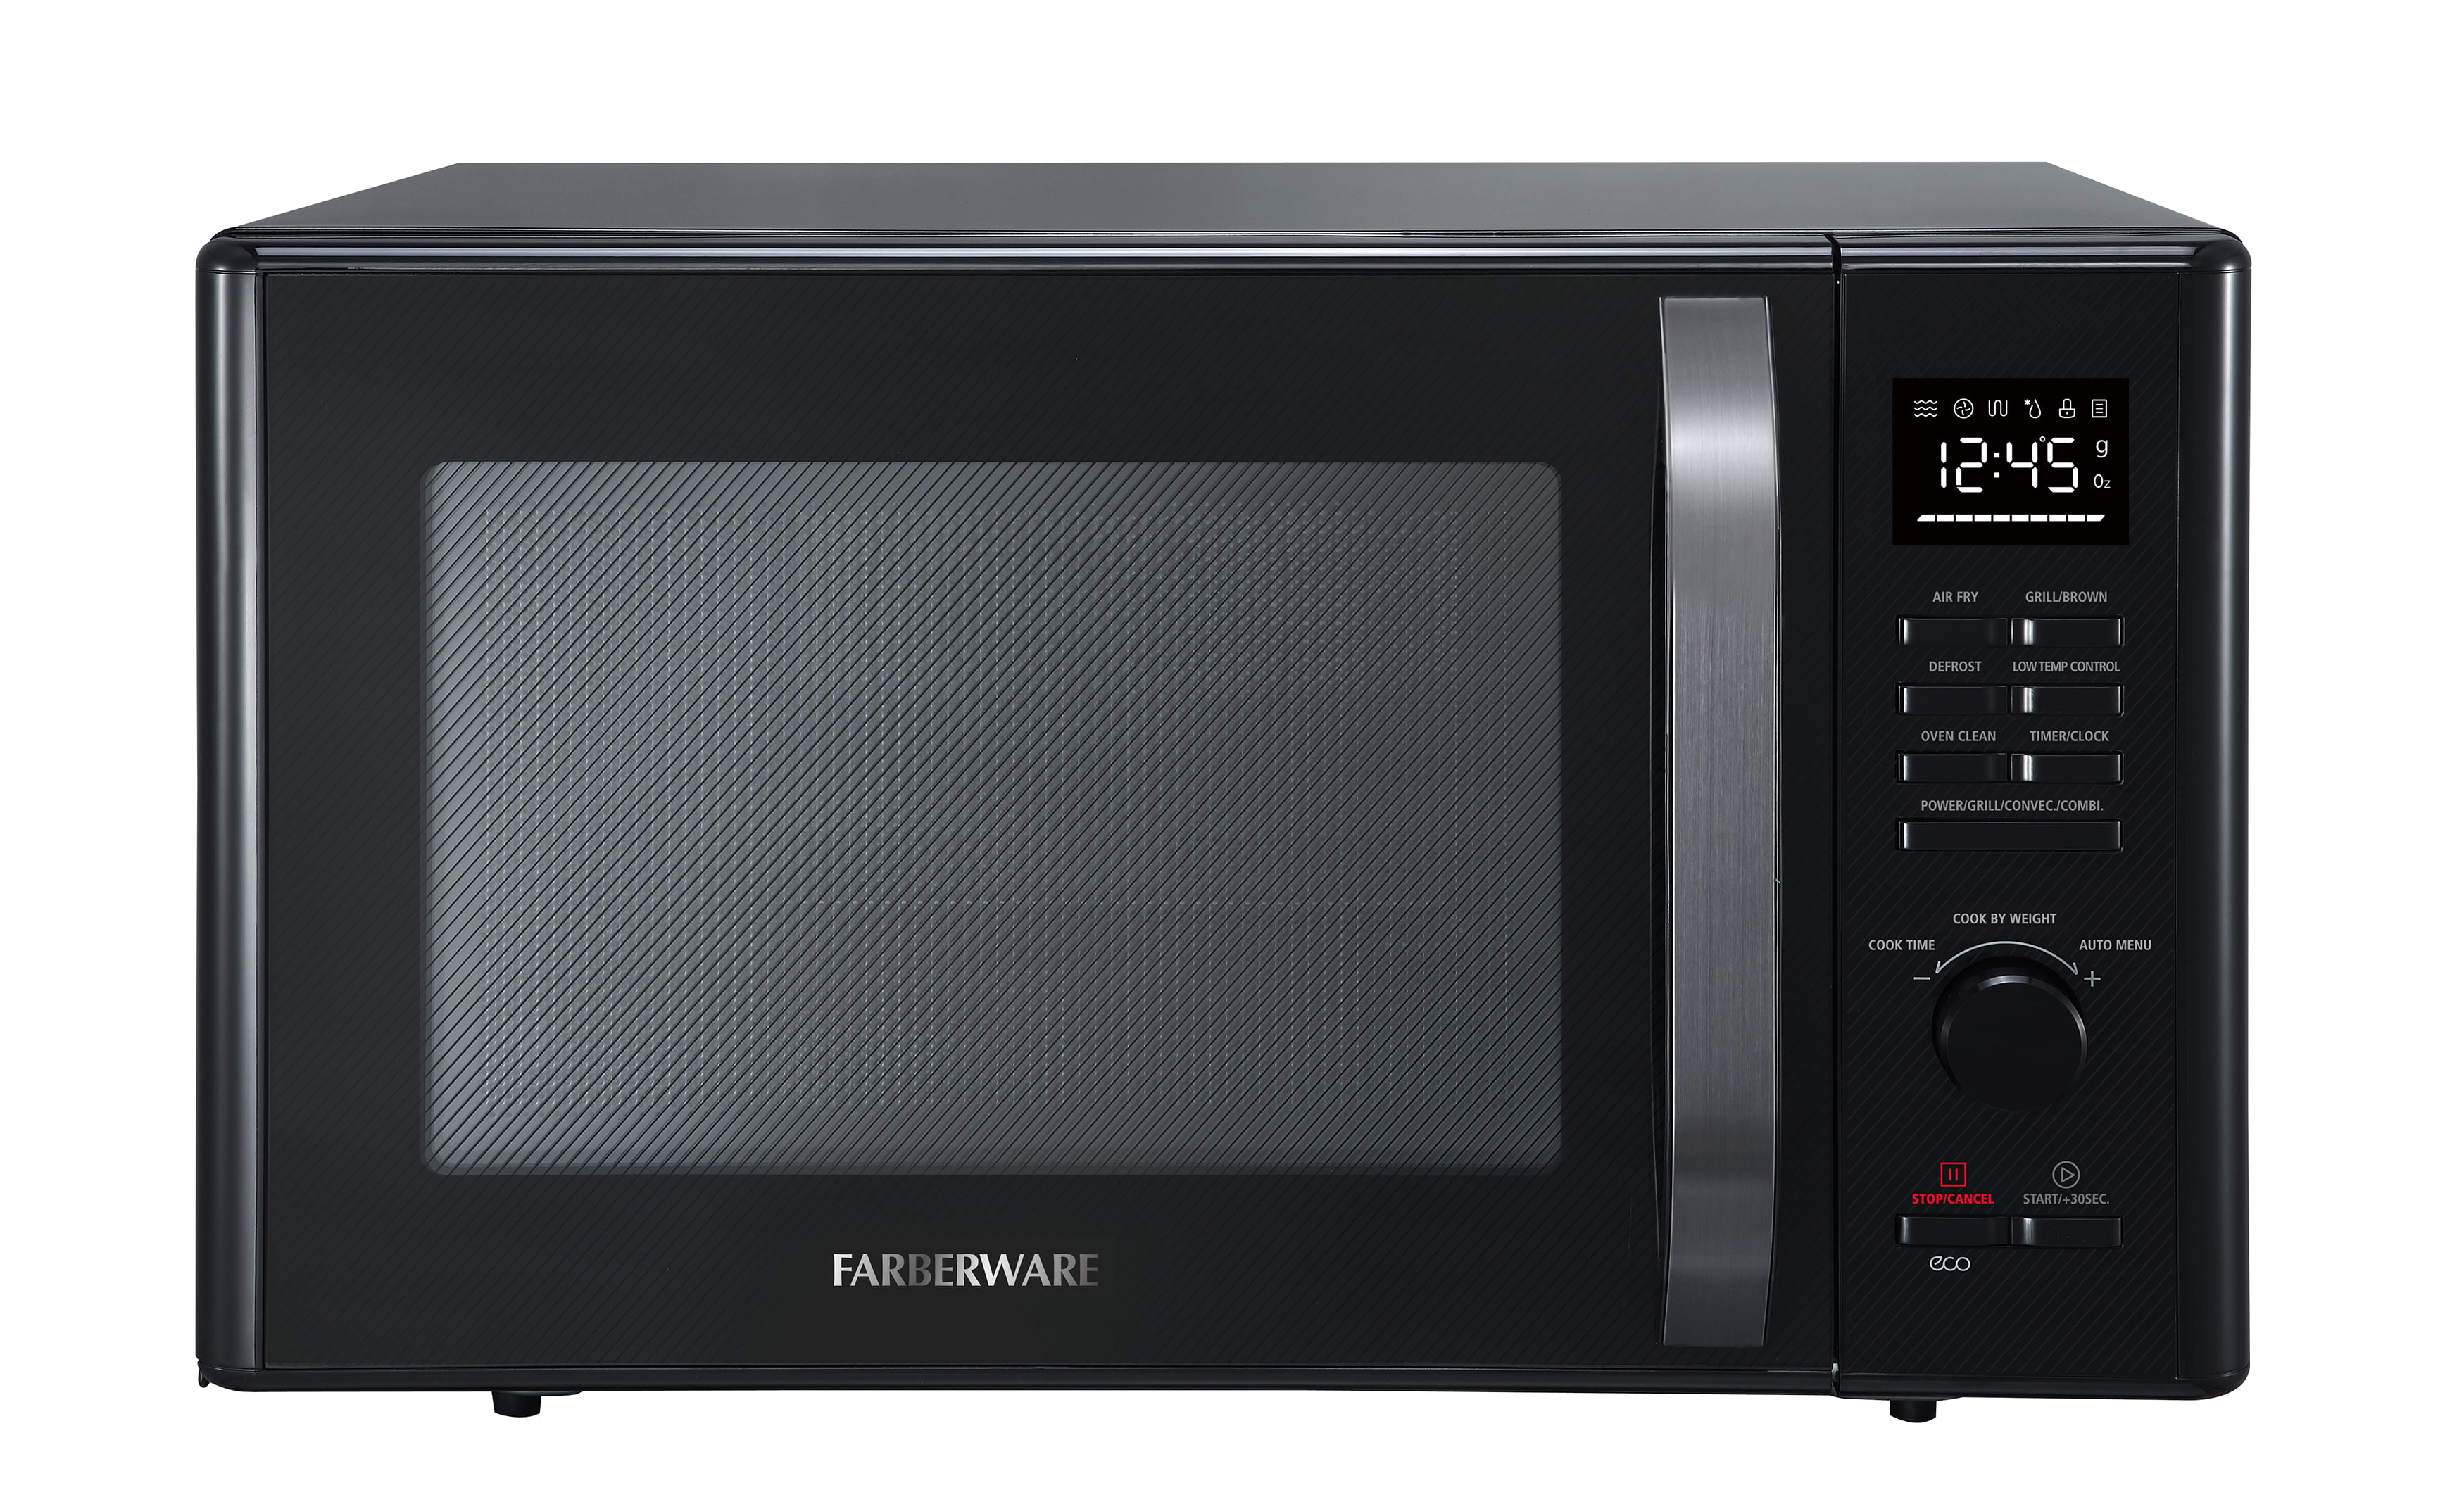 Farberware Black FMO10AHDBKC 1.0 Cu. Ft 1000-Watt Microwave Oven with